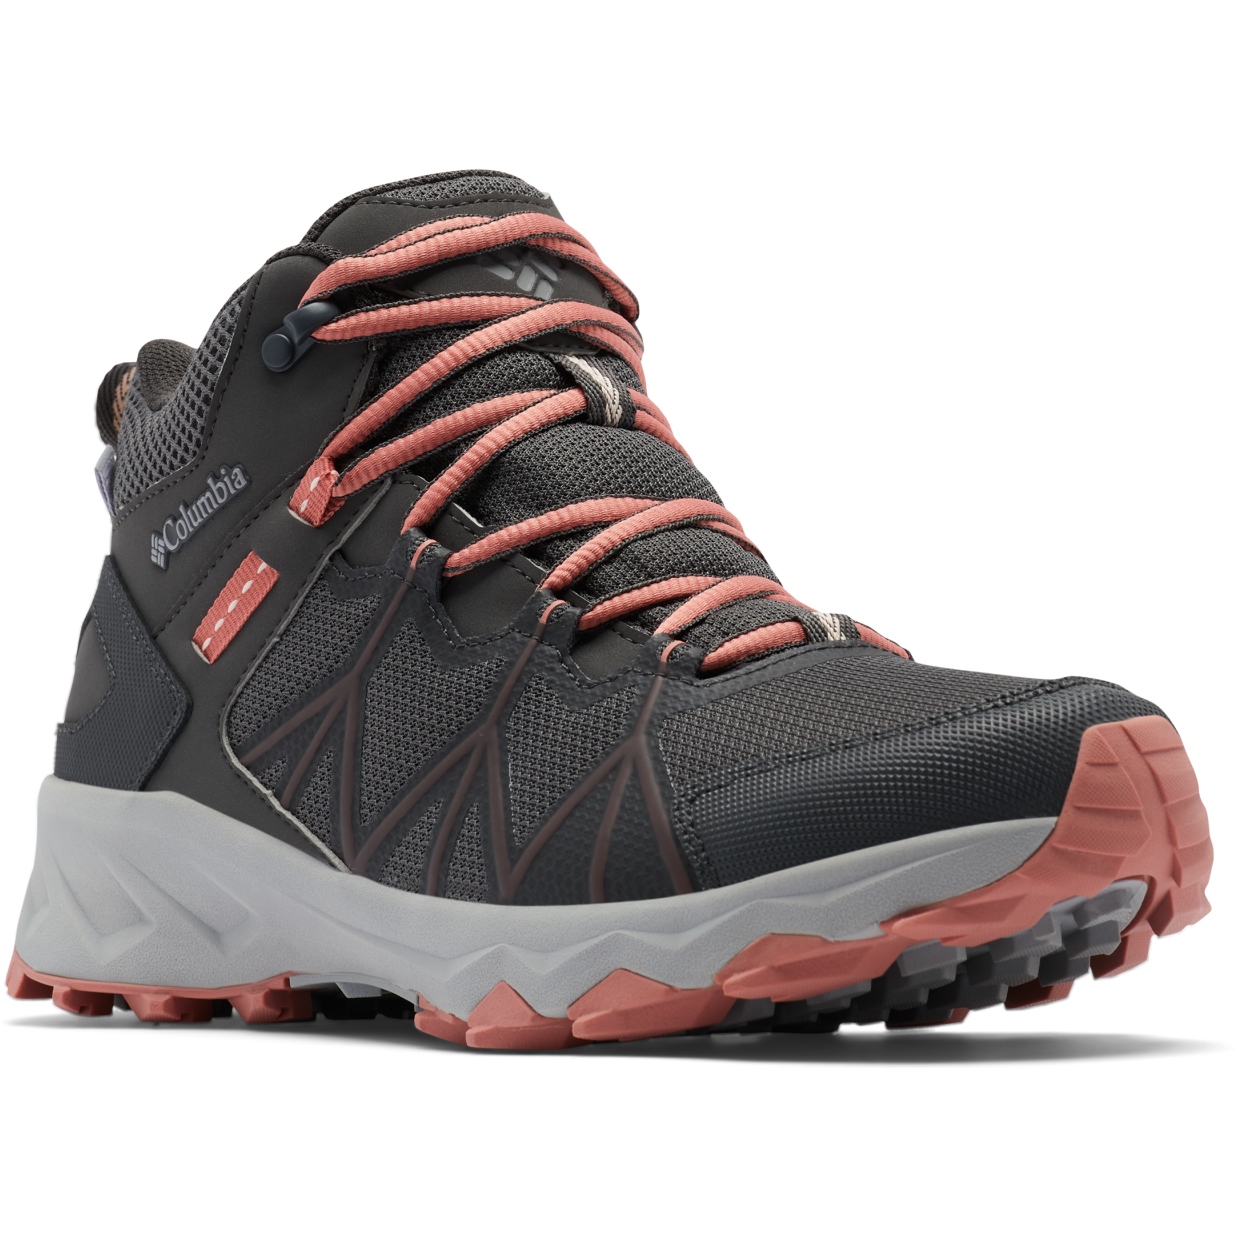 Picture of Columbia Peakfreak II Mid Outdry Hiking Shoes Women - Dark Grey/Dark Coral